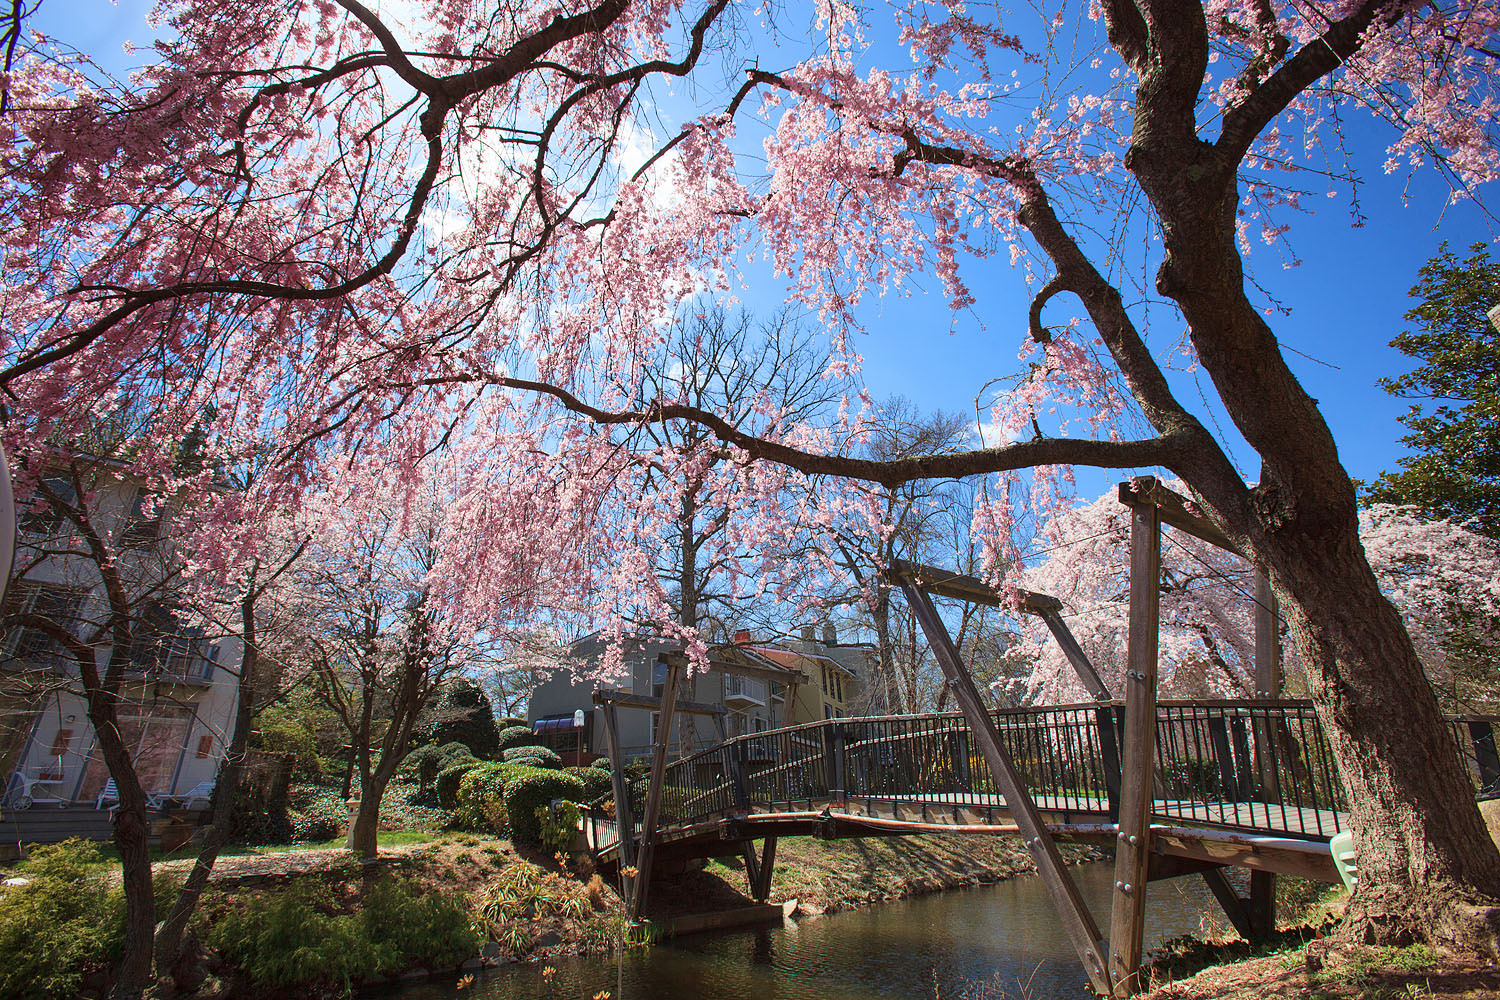 Cherry blossoms at the Van Gogh Bridge